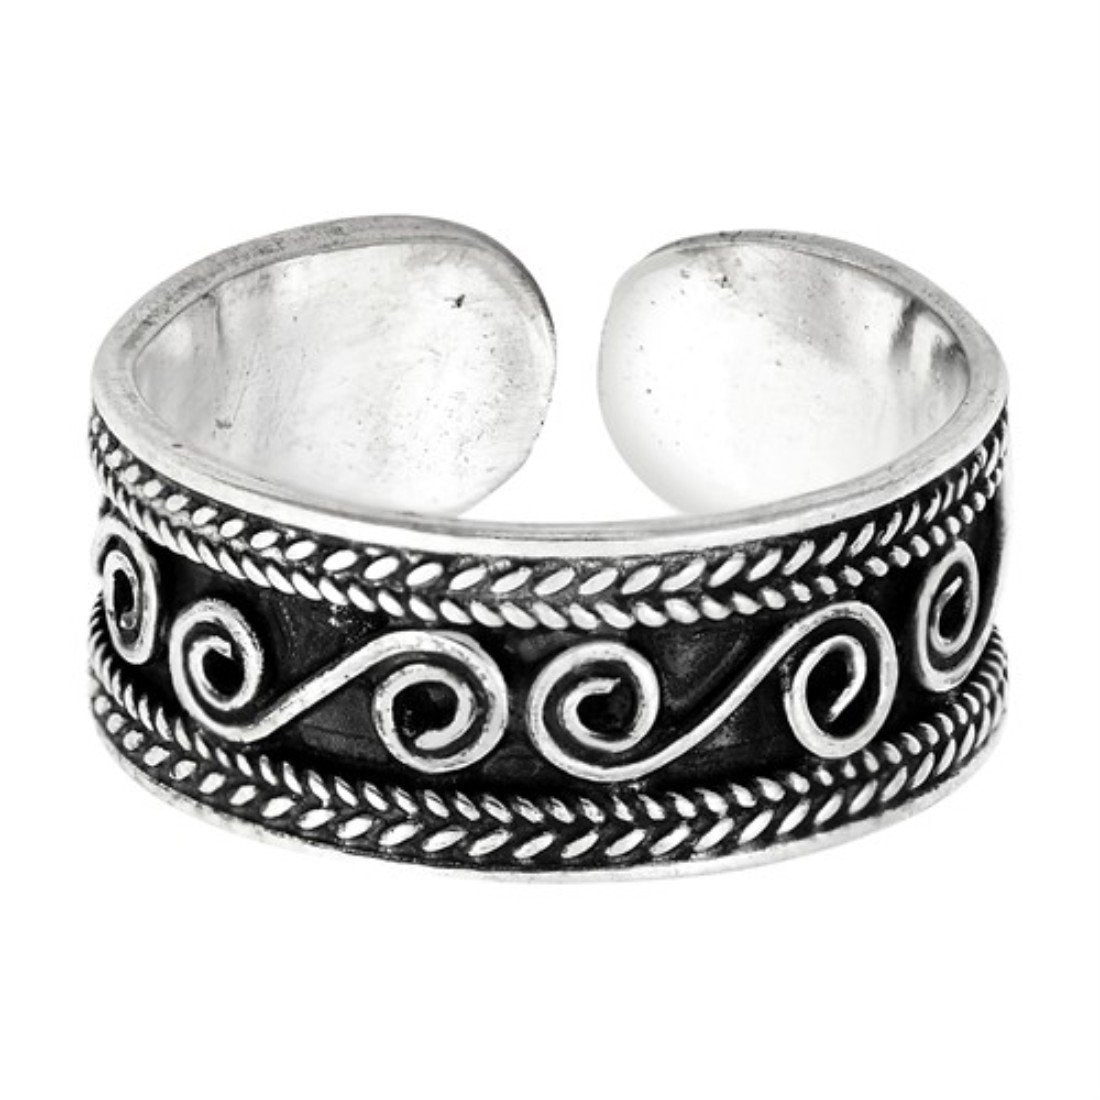 Silver Toe Ring Bali Design Adjustable Band 925 Sterling Silver (6mm)